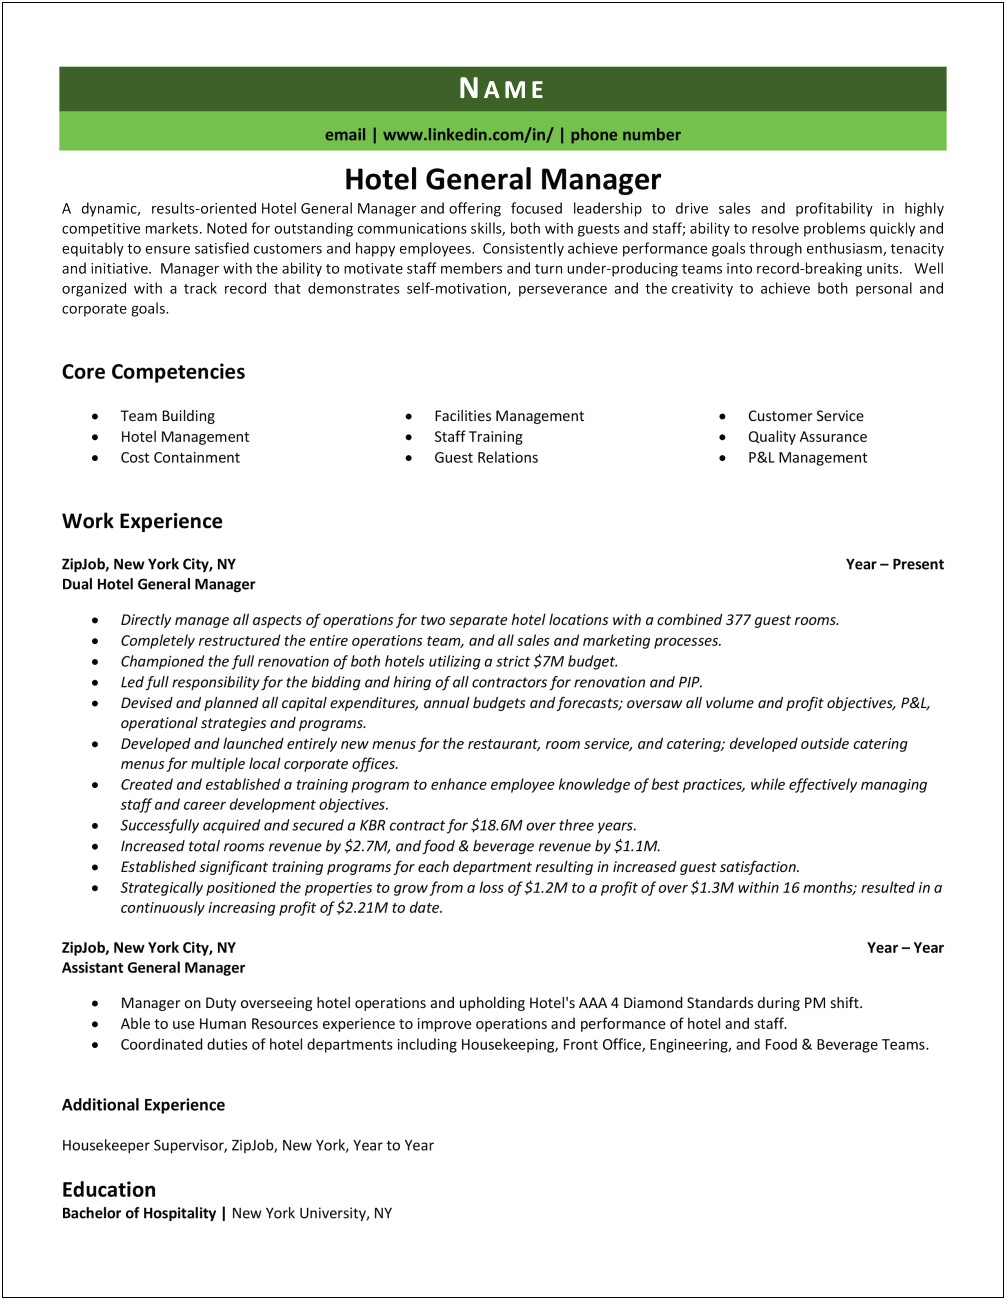 Resume Headline For Hotel General Manager